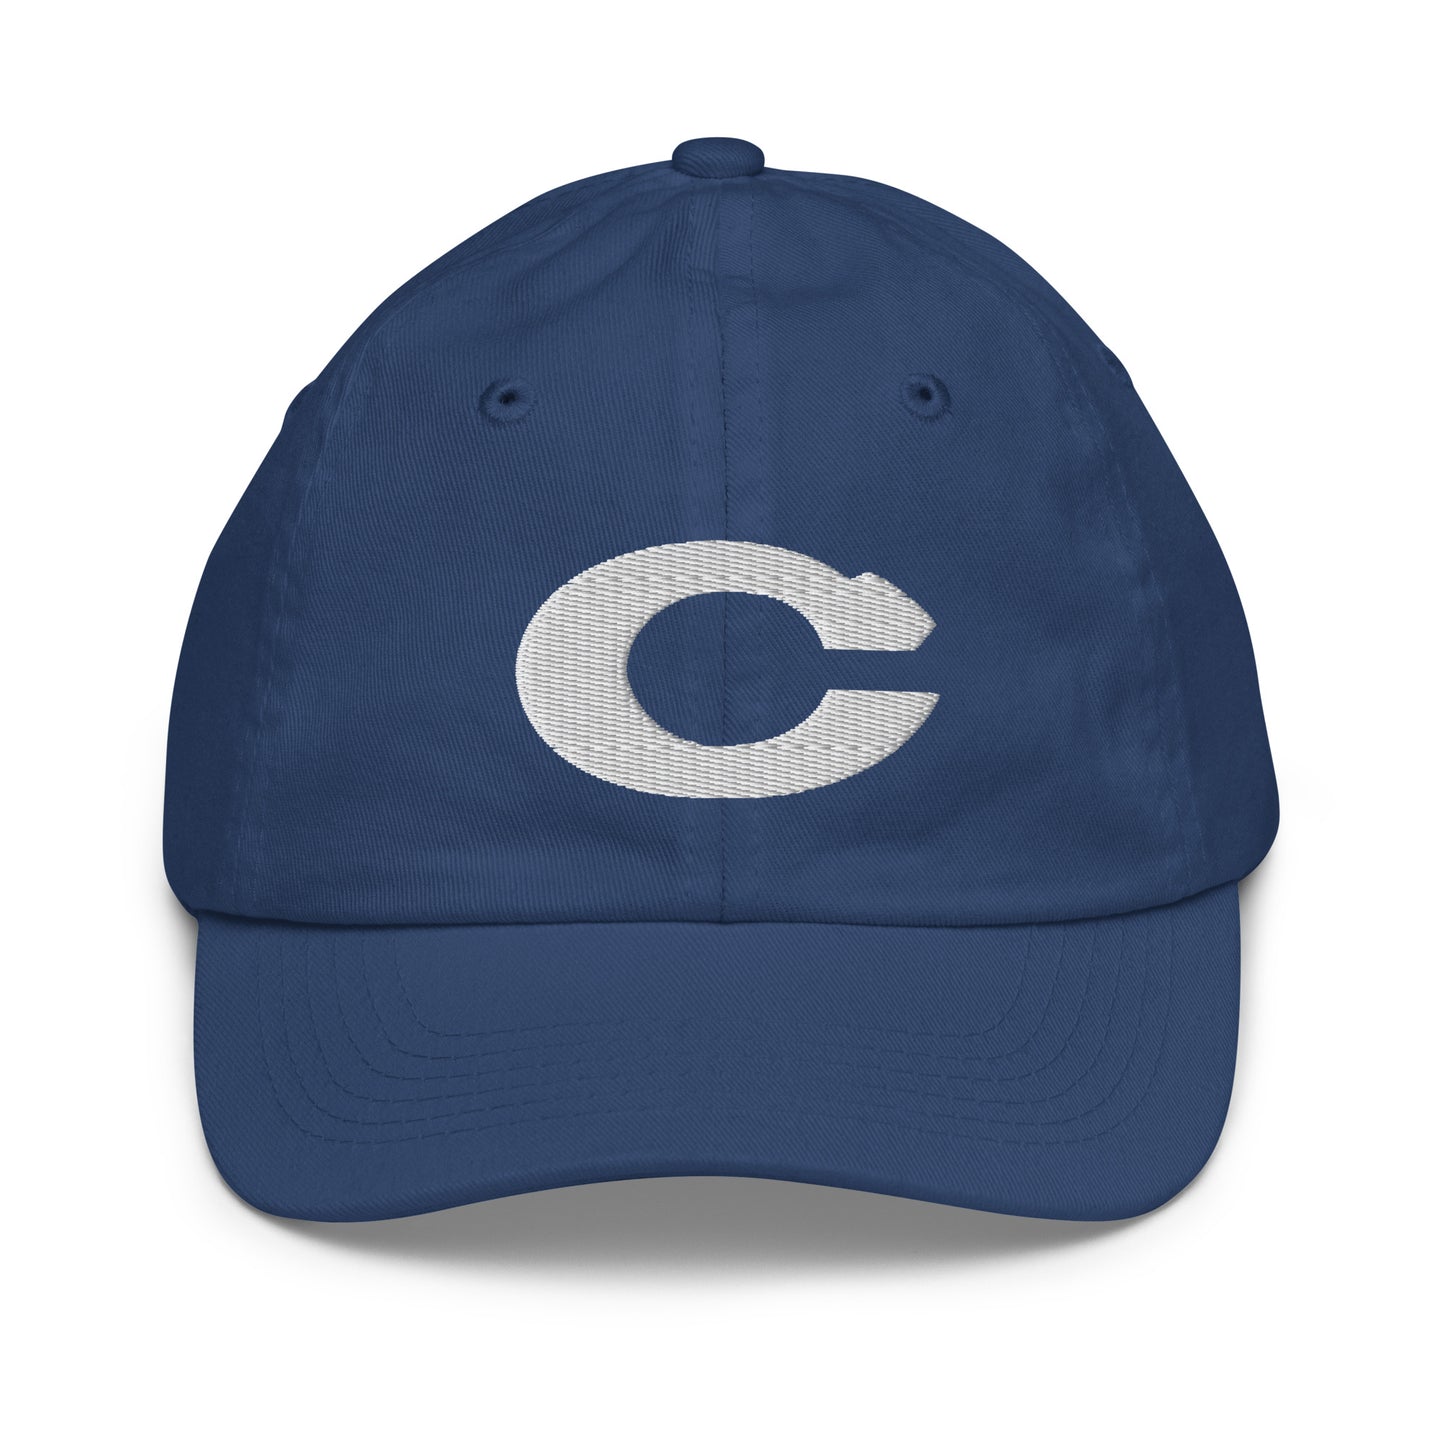 C Youth Hat